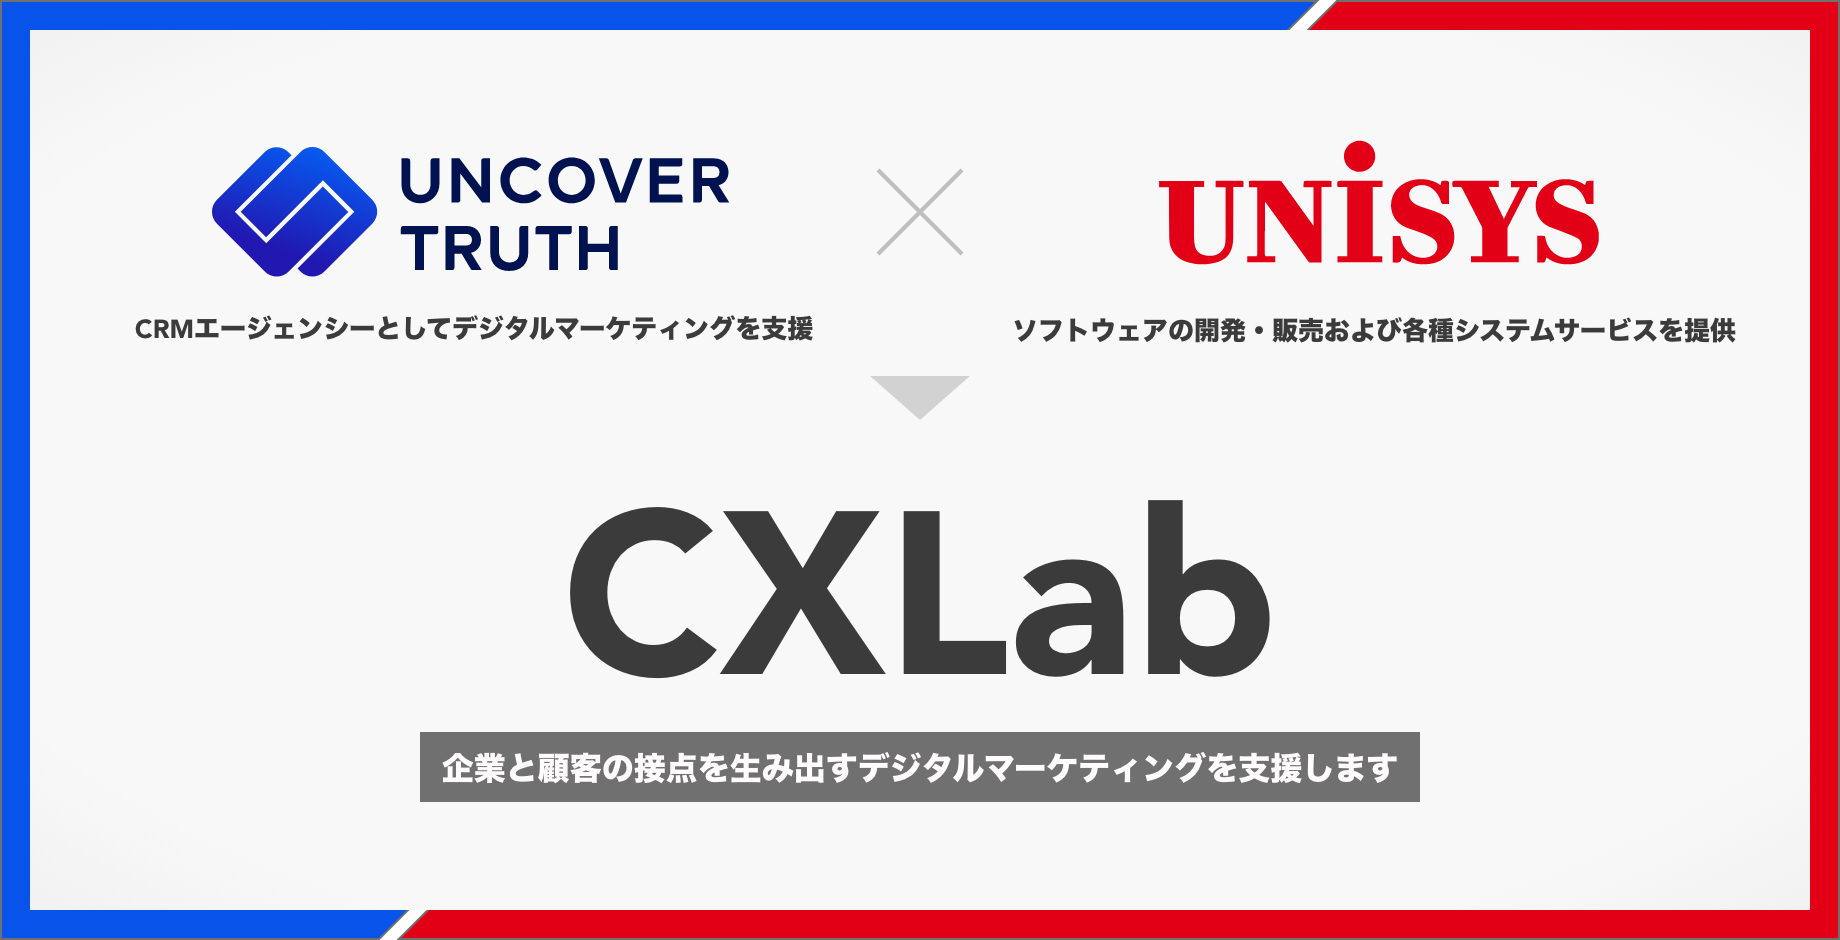 Uncover Truth 日本ユニシス 企業と顧客の新たな接点や体験の創出 最適化支援での協業開始 株式会社 Uncover Truthのプレスリリース